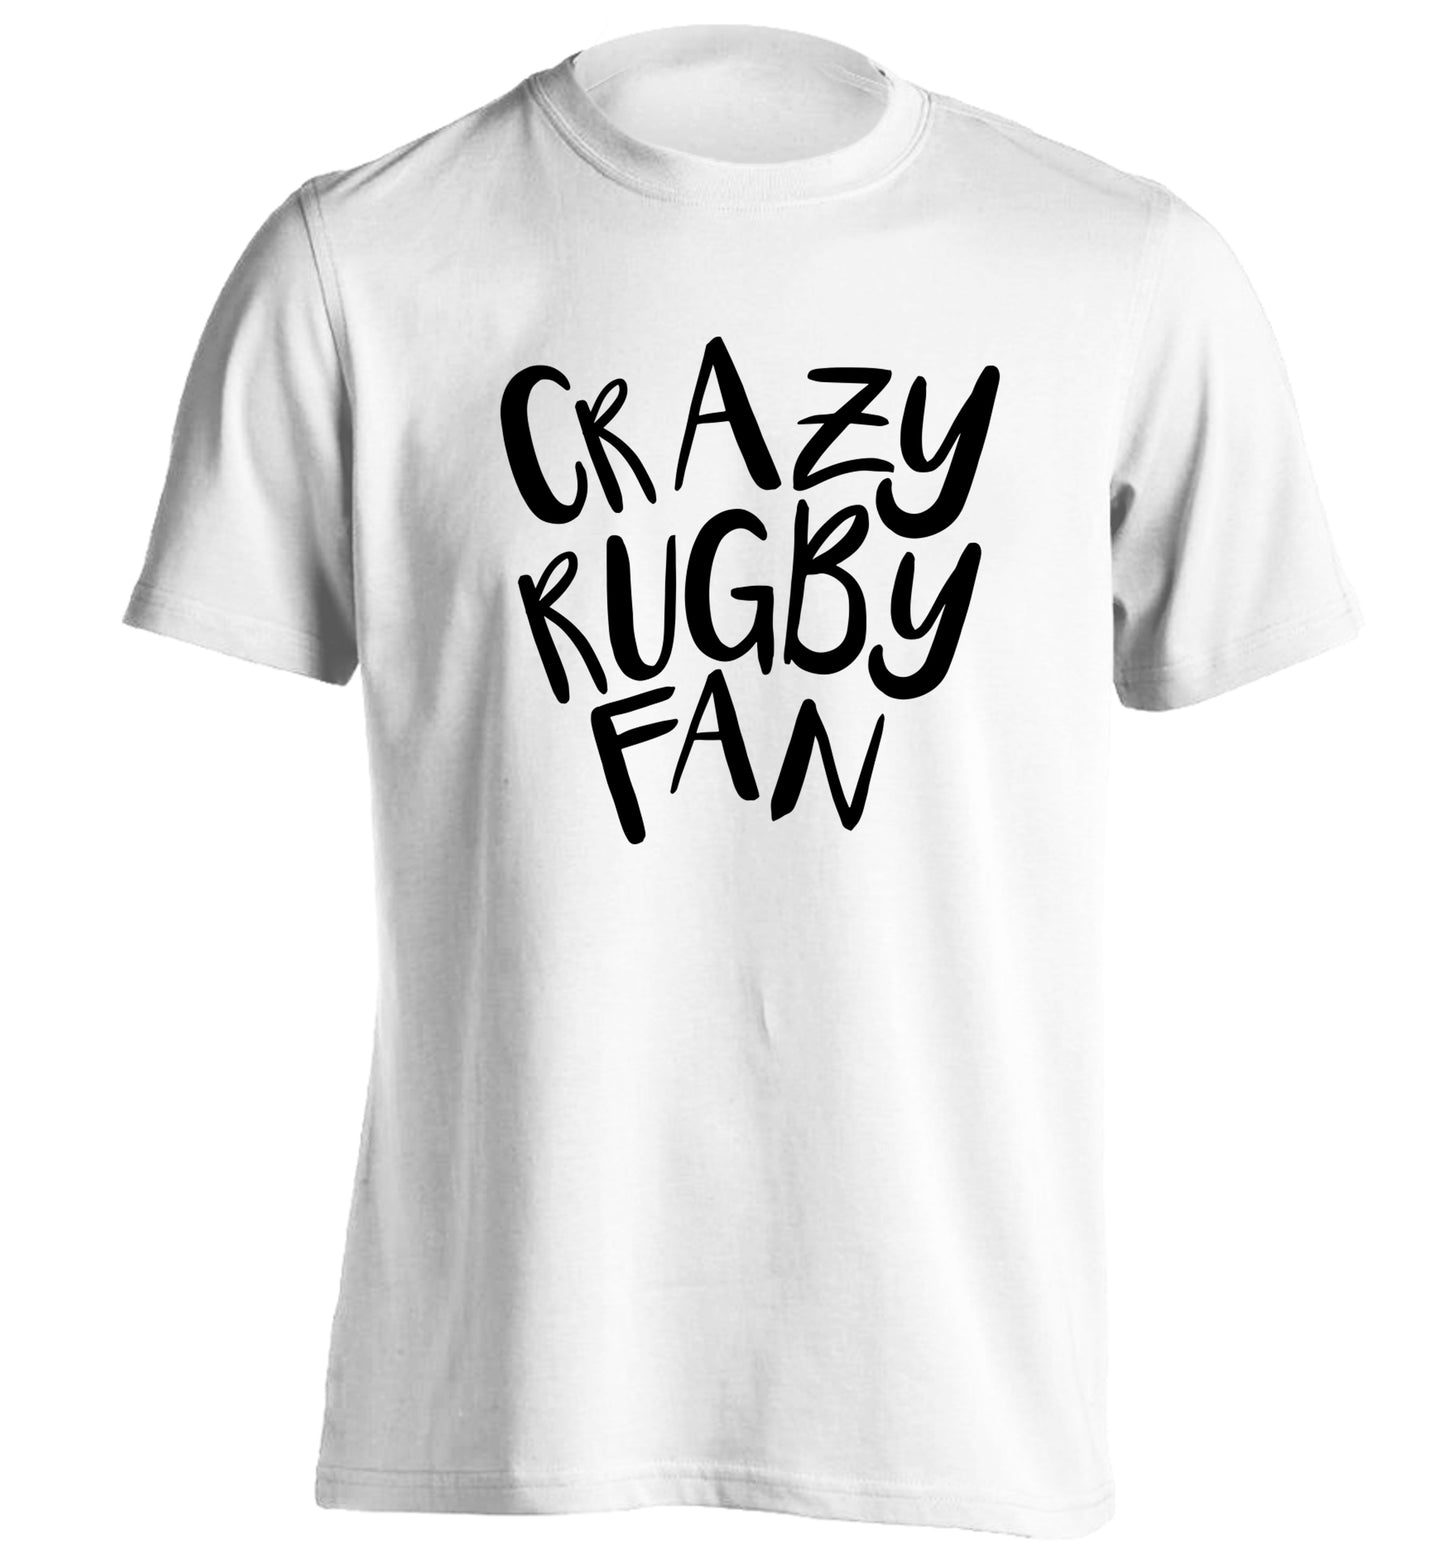 Crazy rugby fan adults unisex white Tshirt 2XL